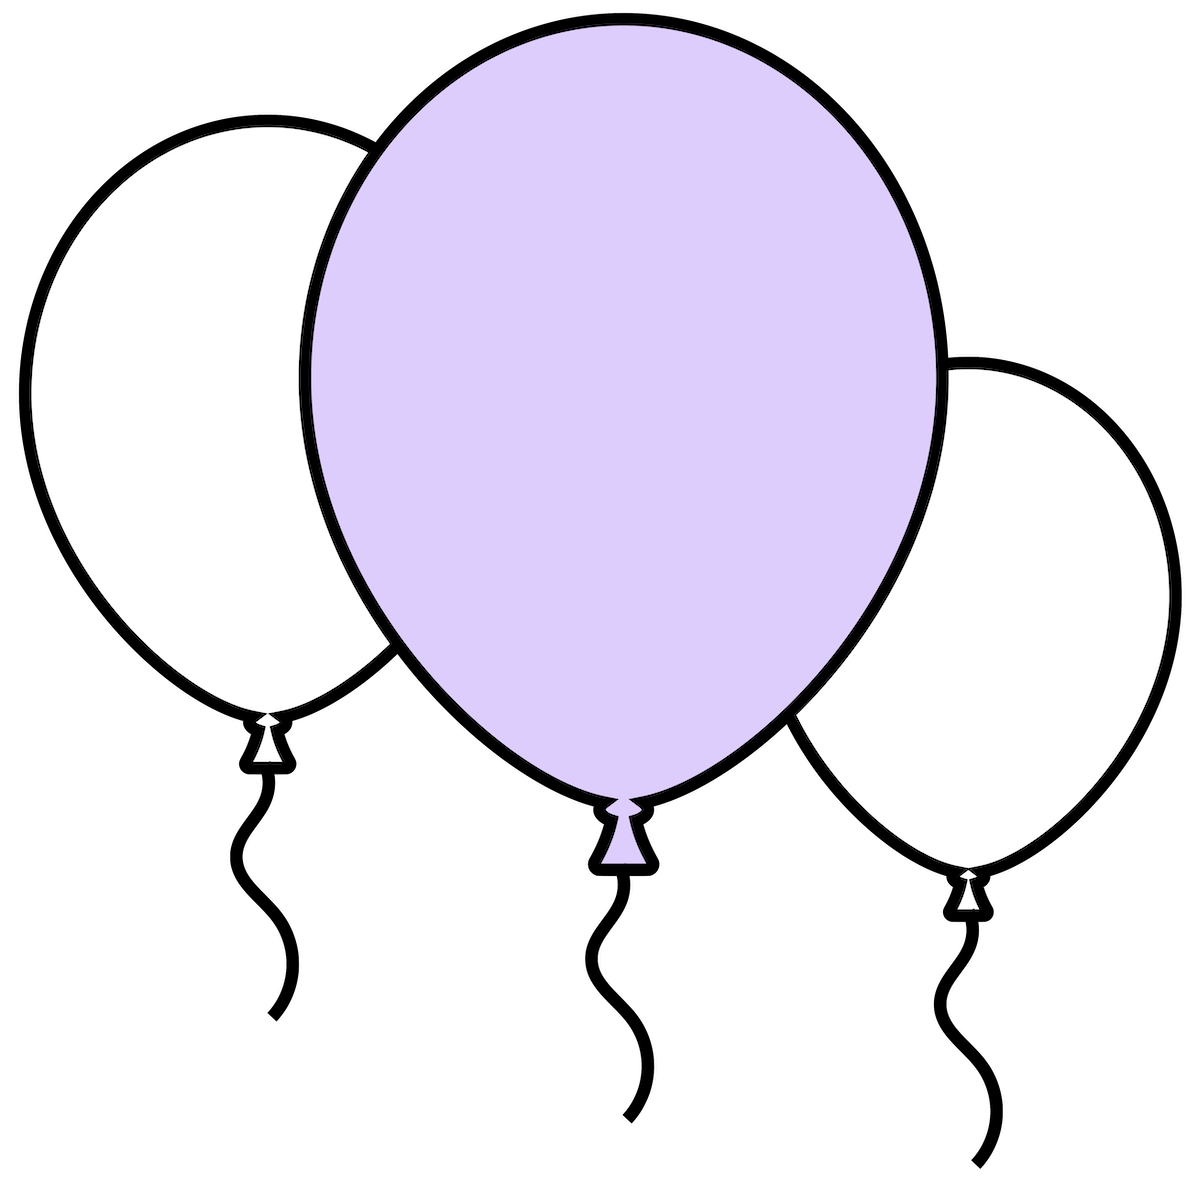 Balloon_17c6bdbf-ead1-4dcc-9d54-28dc690c566c.png